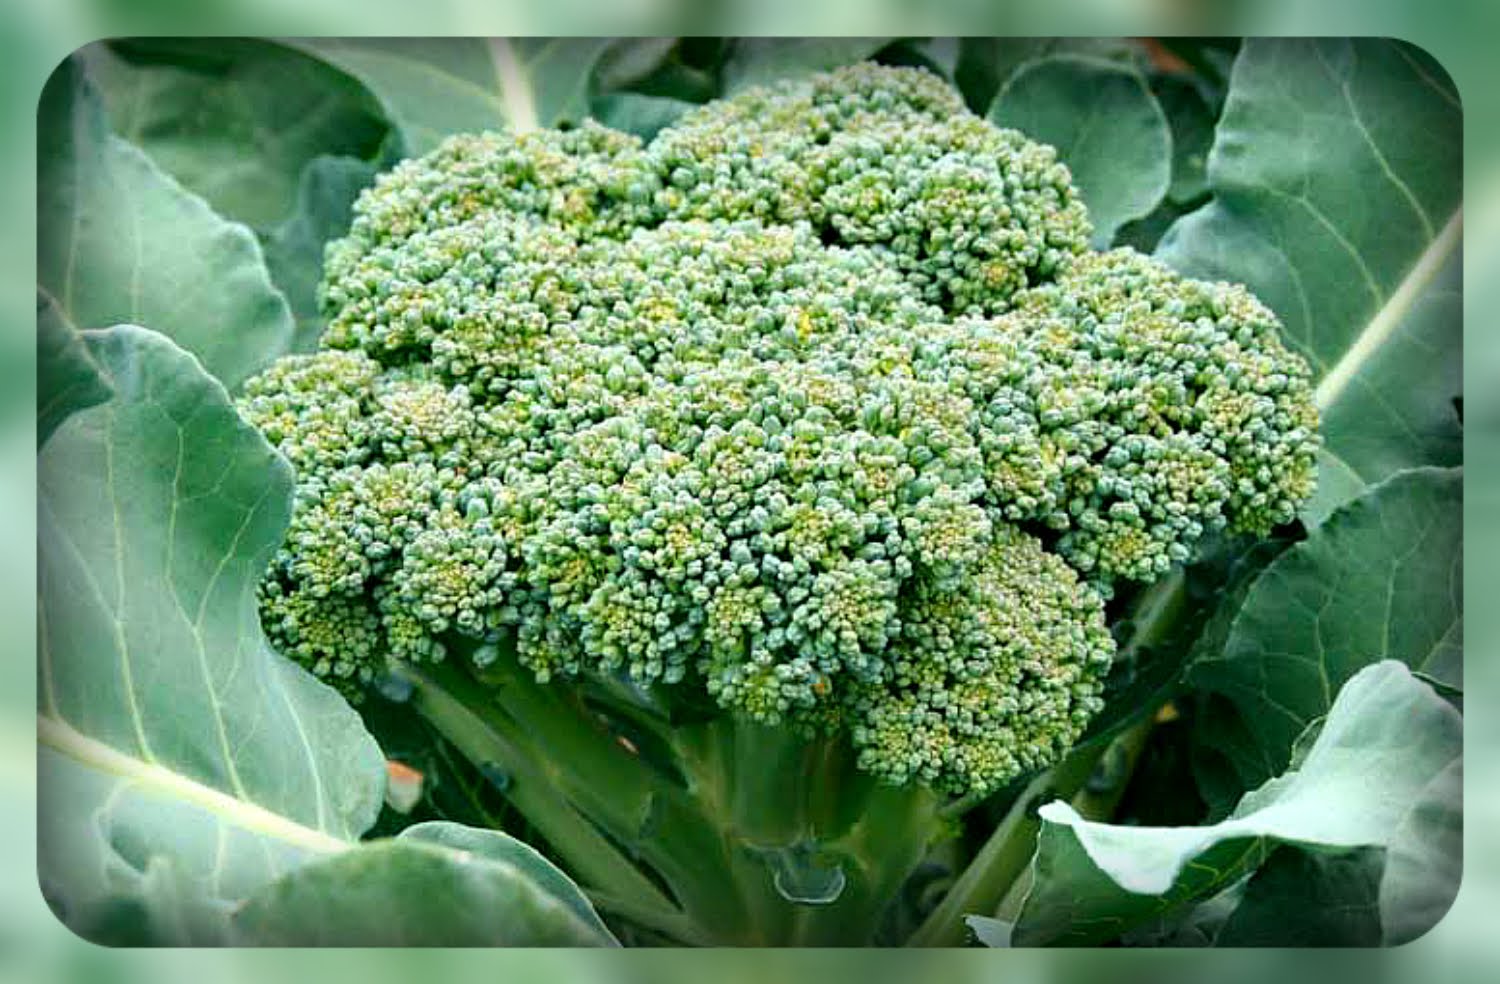 Cabeza de brócoli